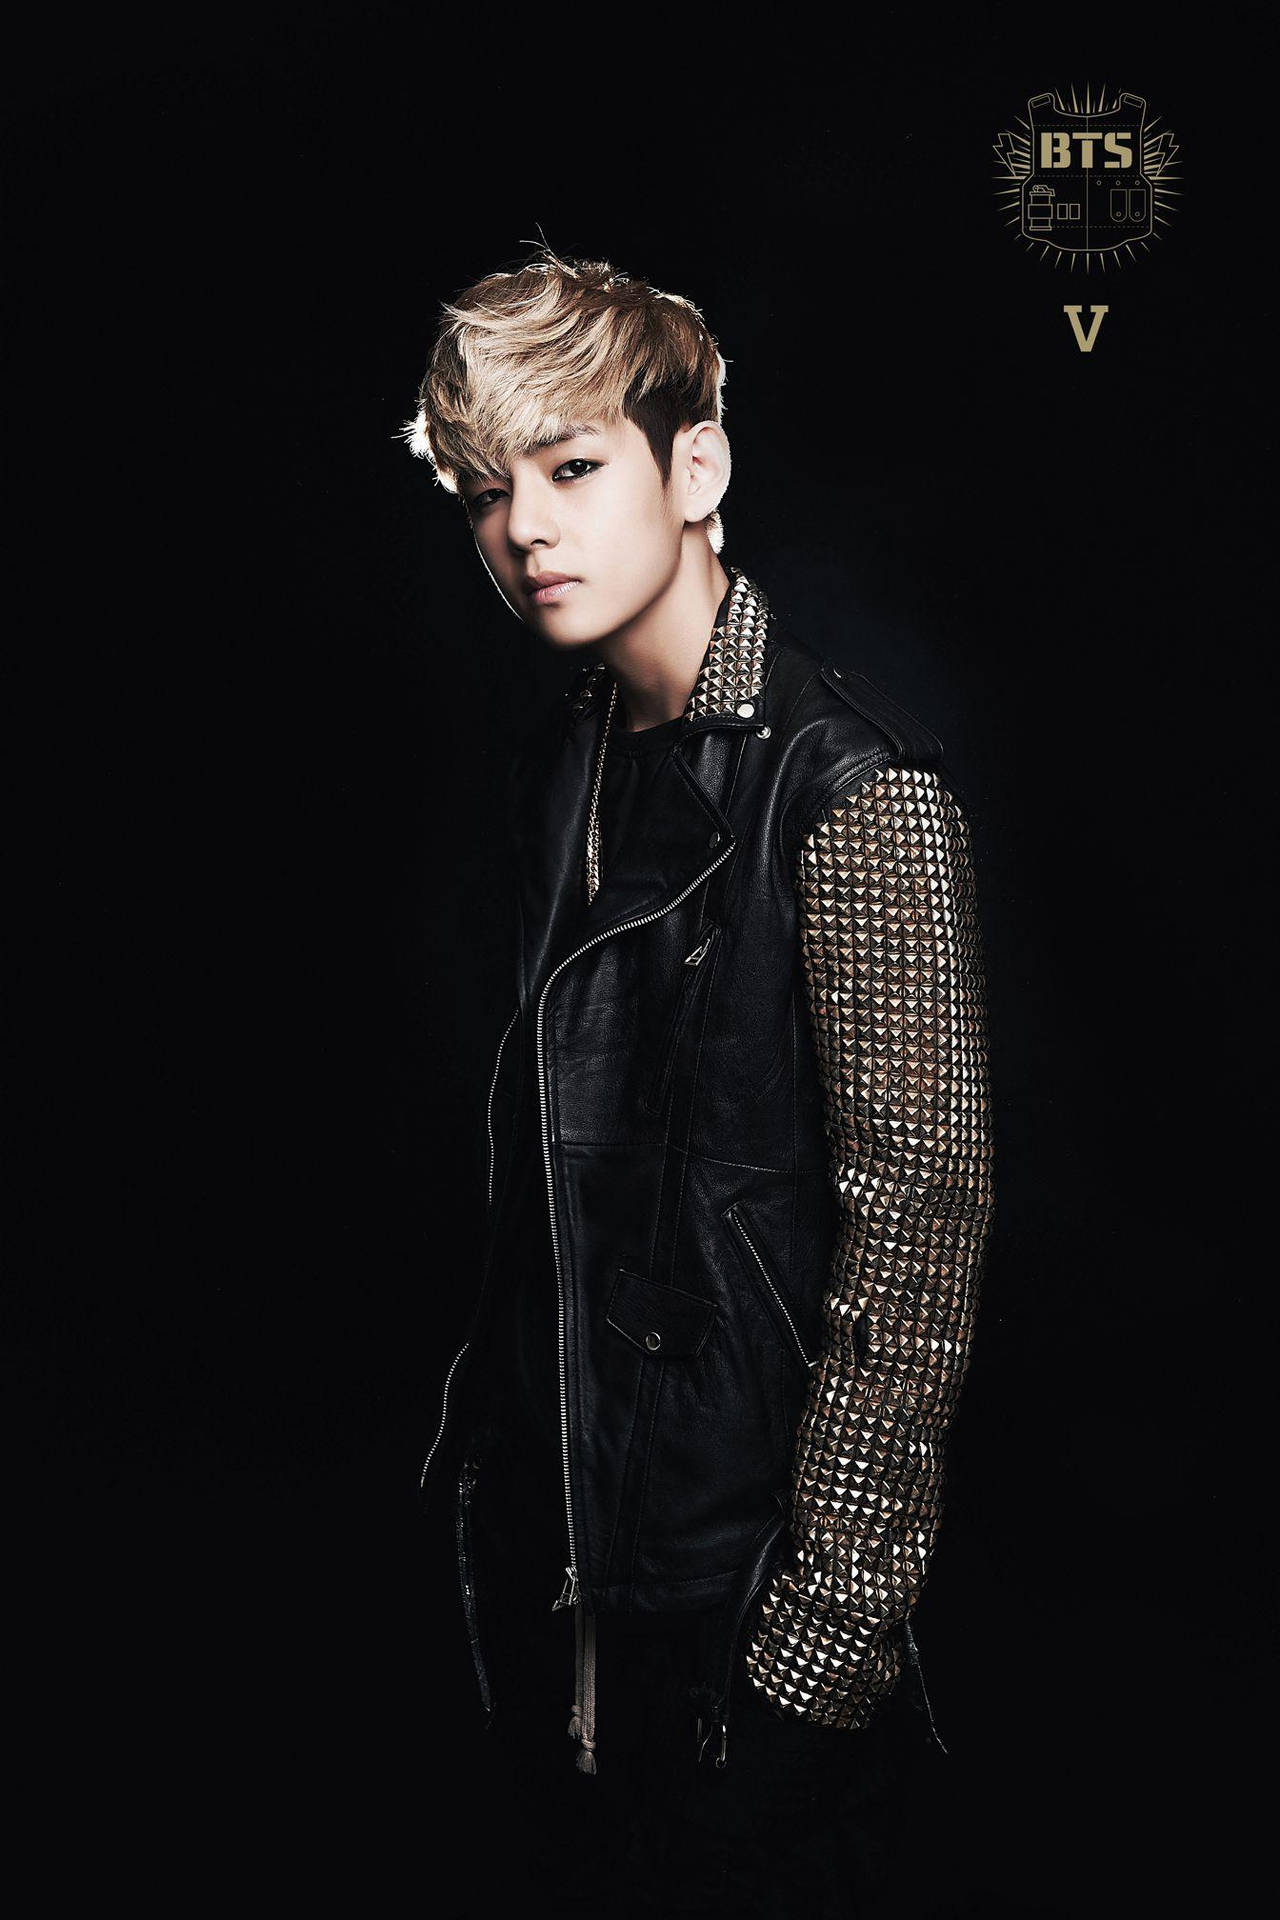 Taehyung Cute Wearing Black Leather Jacket Wallpaper